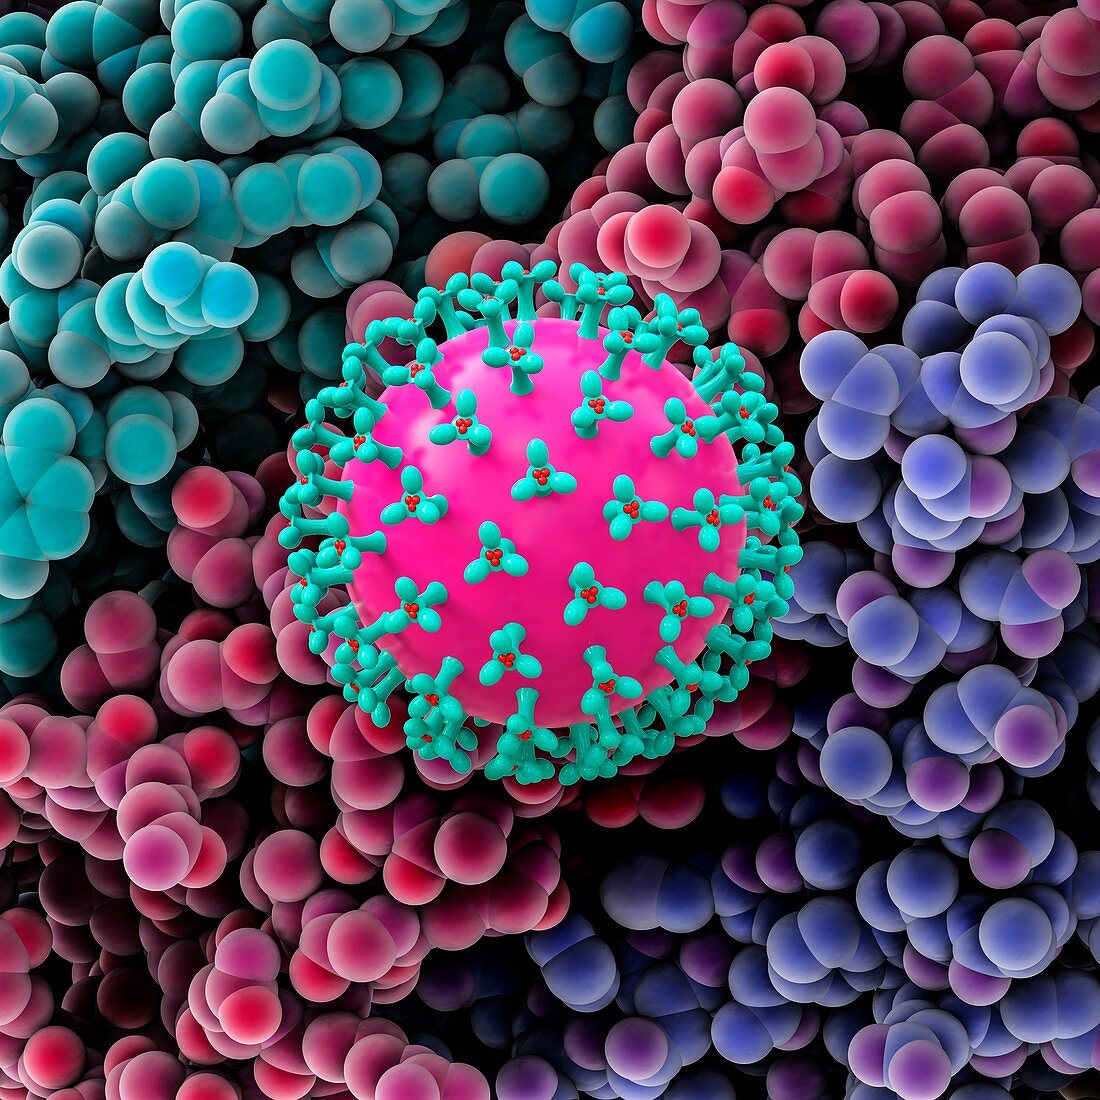 Coronavirus capsid, conceptual illustration